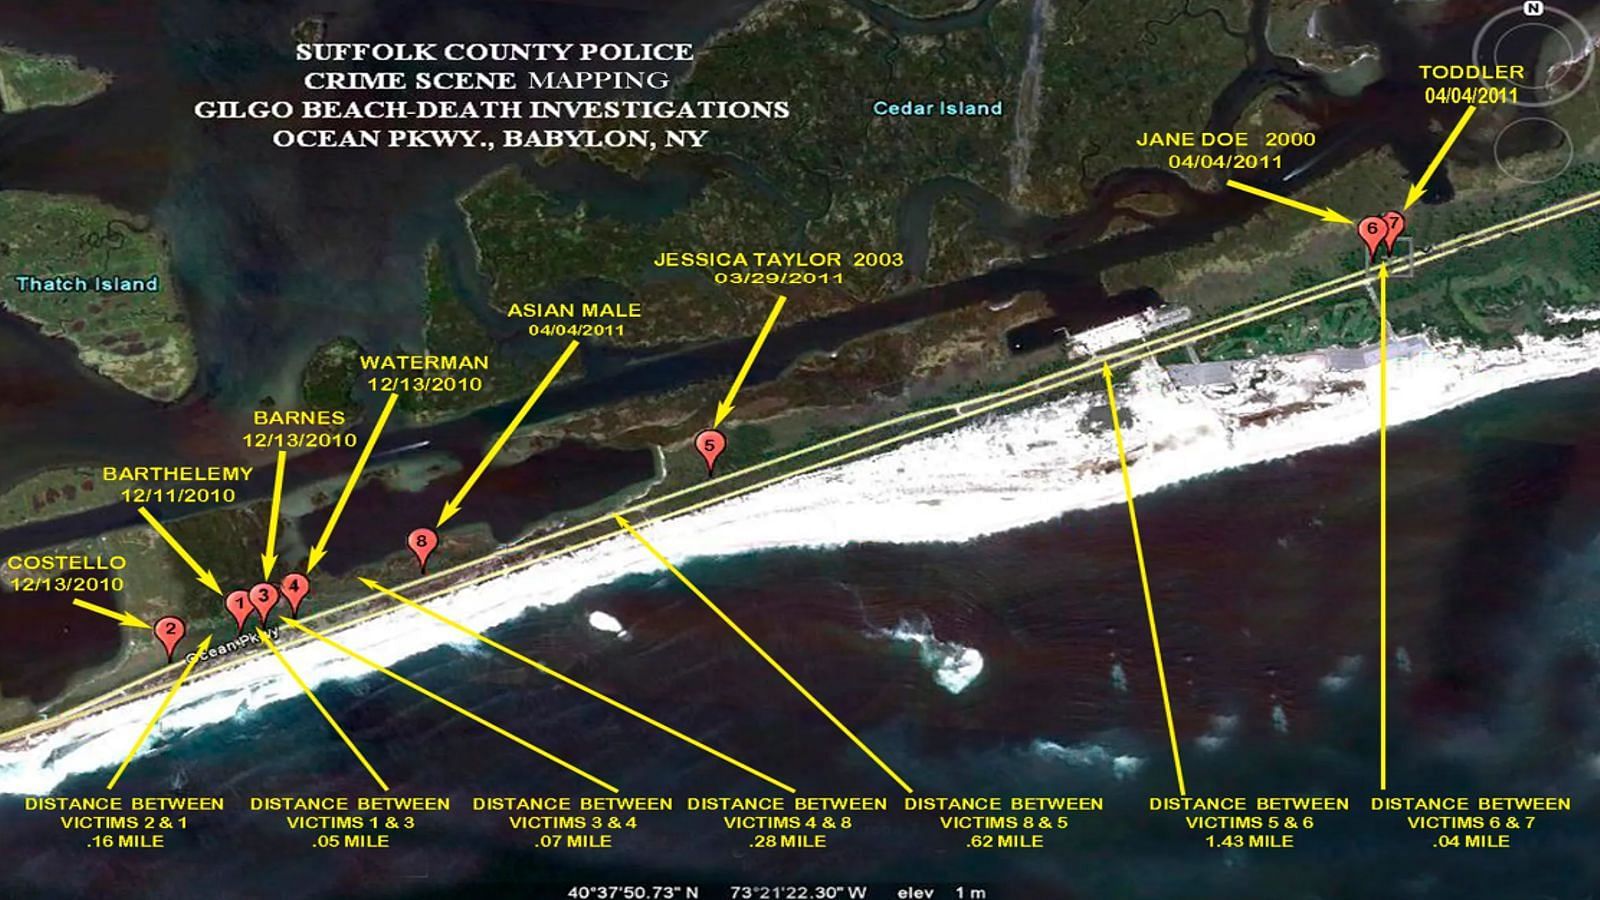 Crime Scene Mapping (Image via Suffolk County Police)